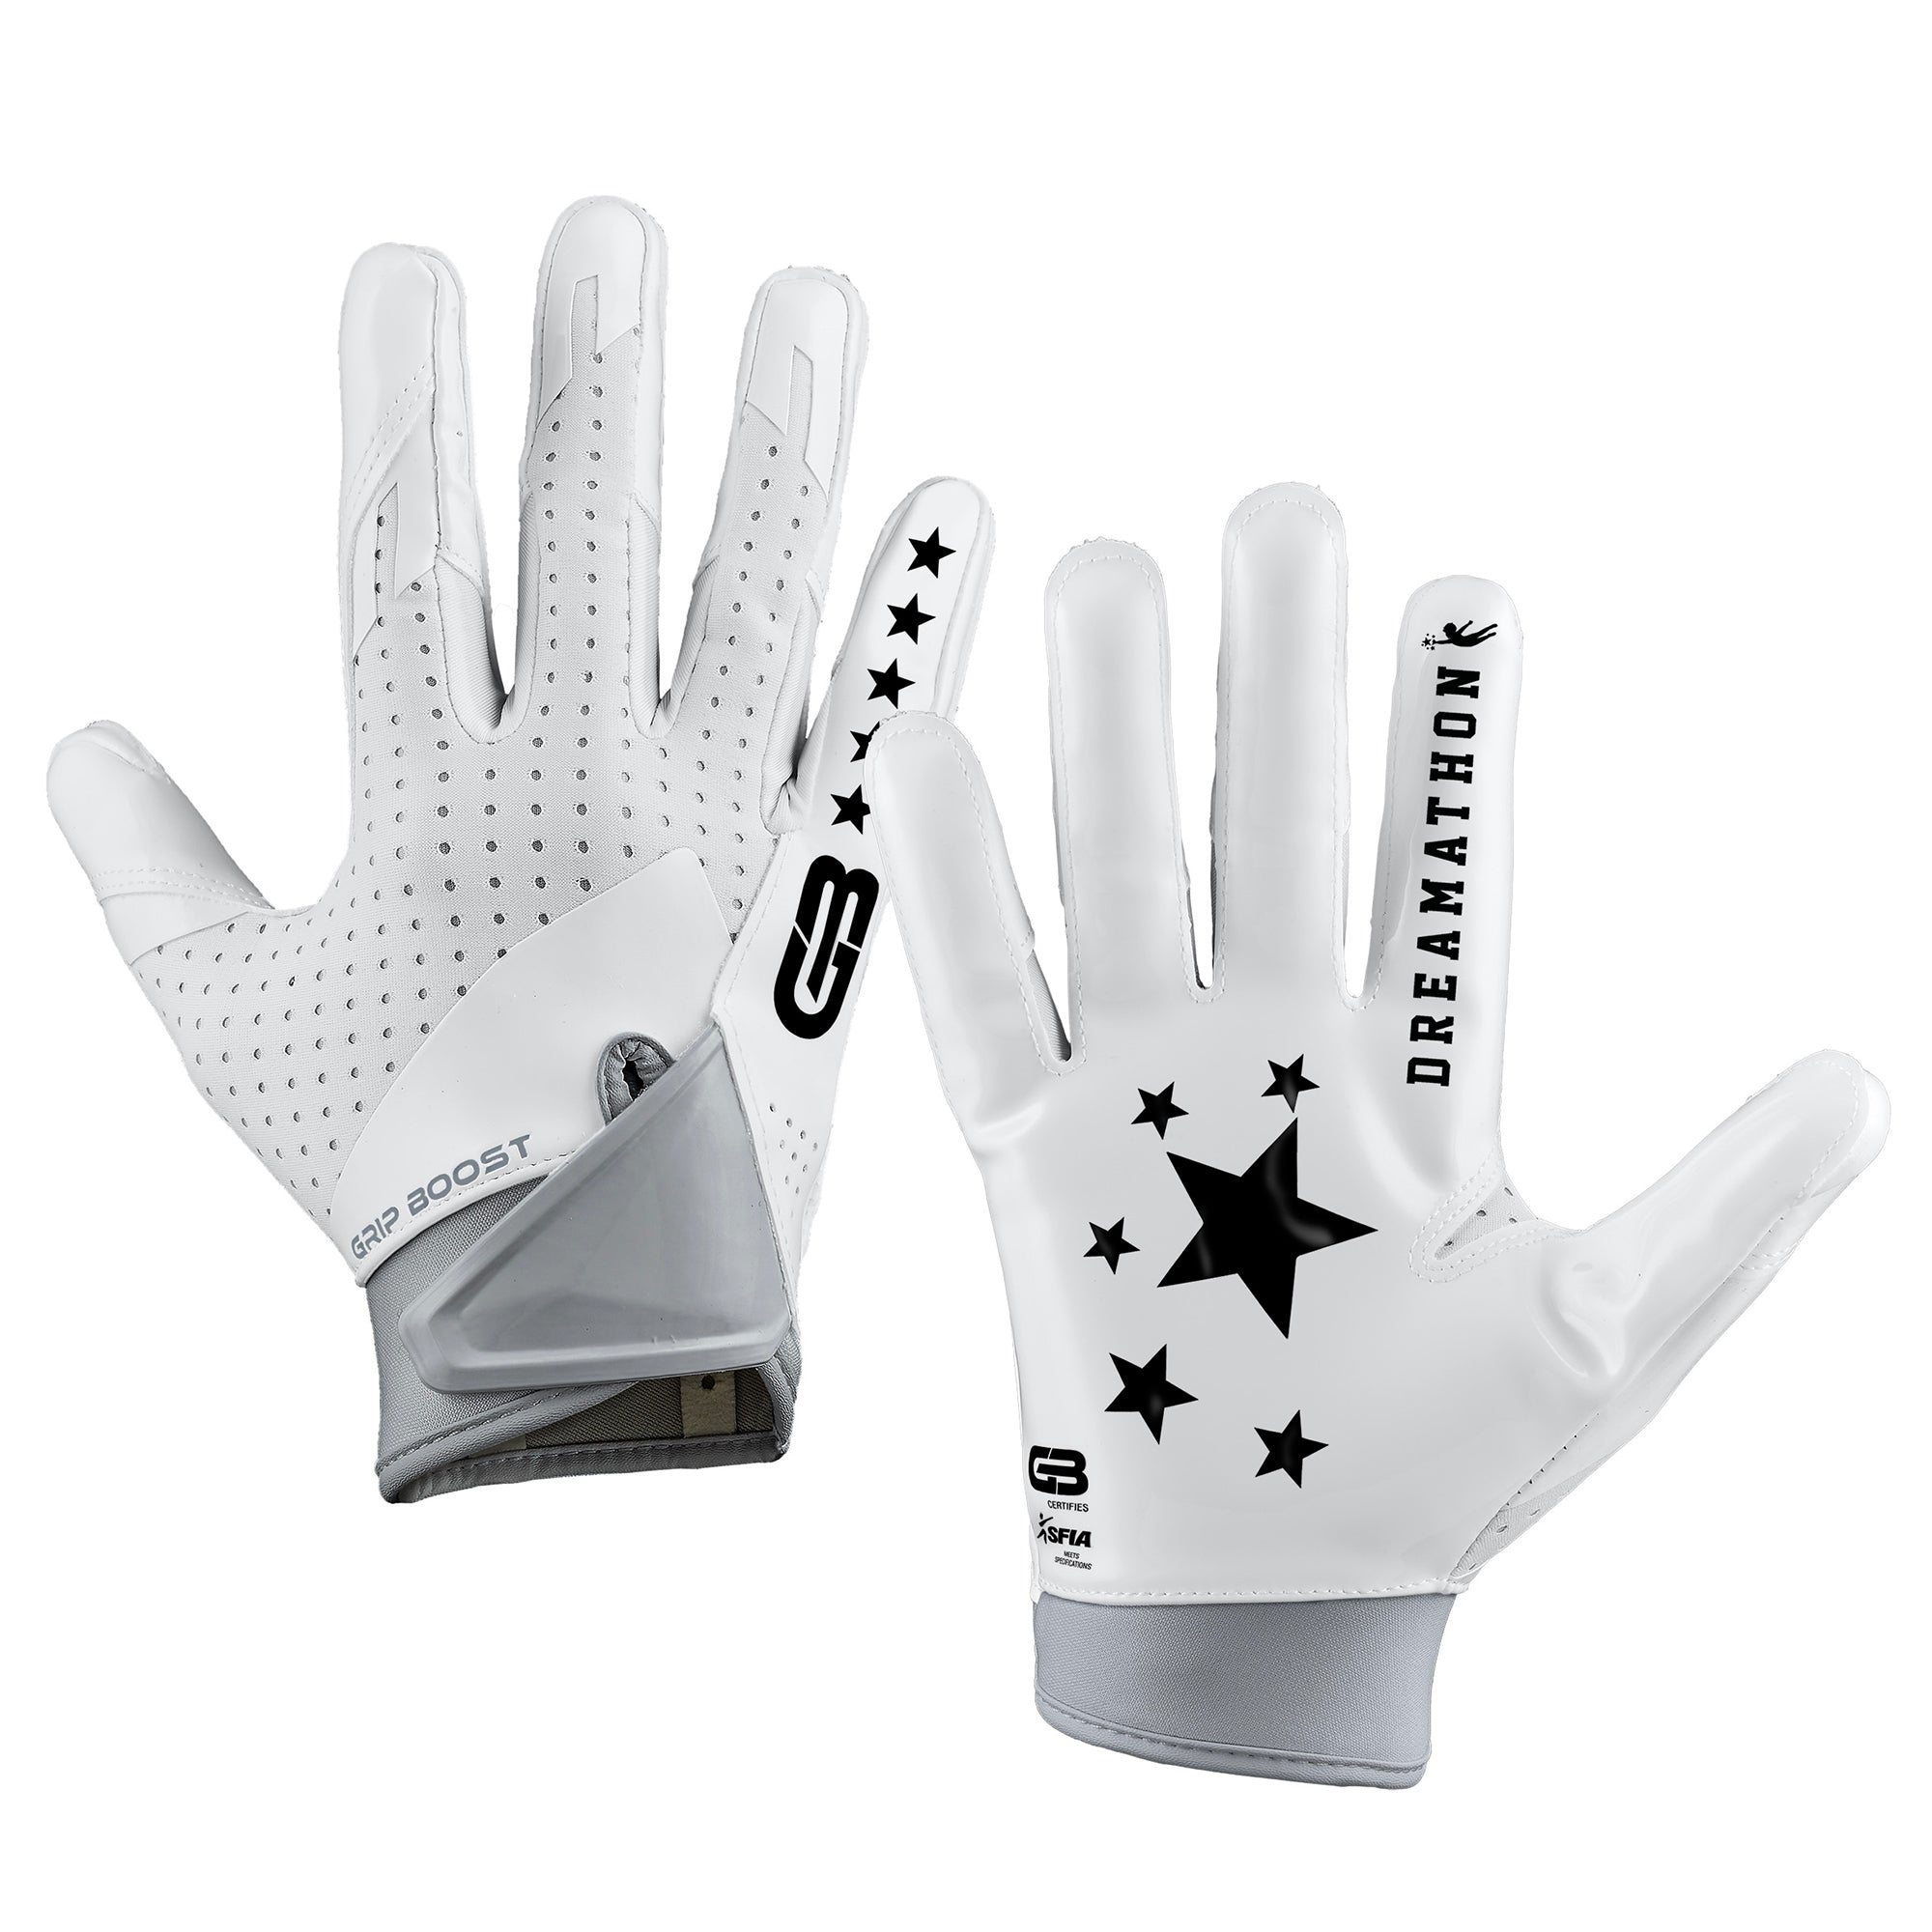 Grip Boost x Dreamathon Stealth 5.0 Football Gloves - Adult Sizes, Medium